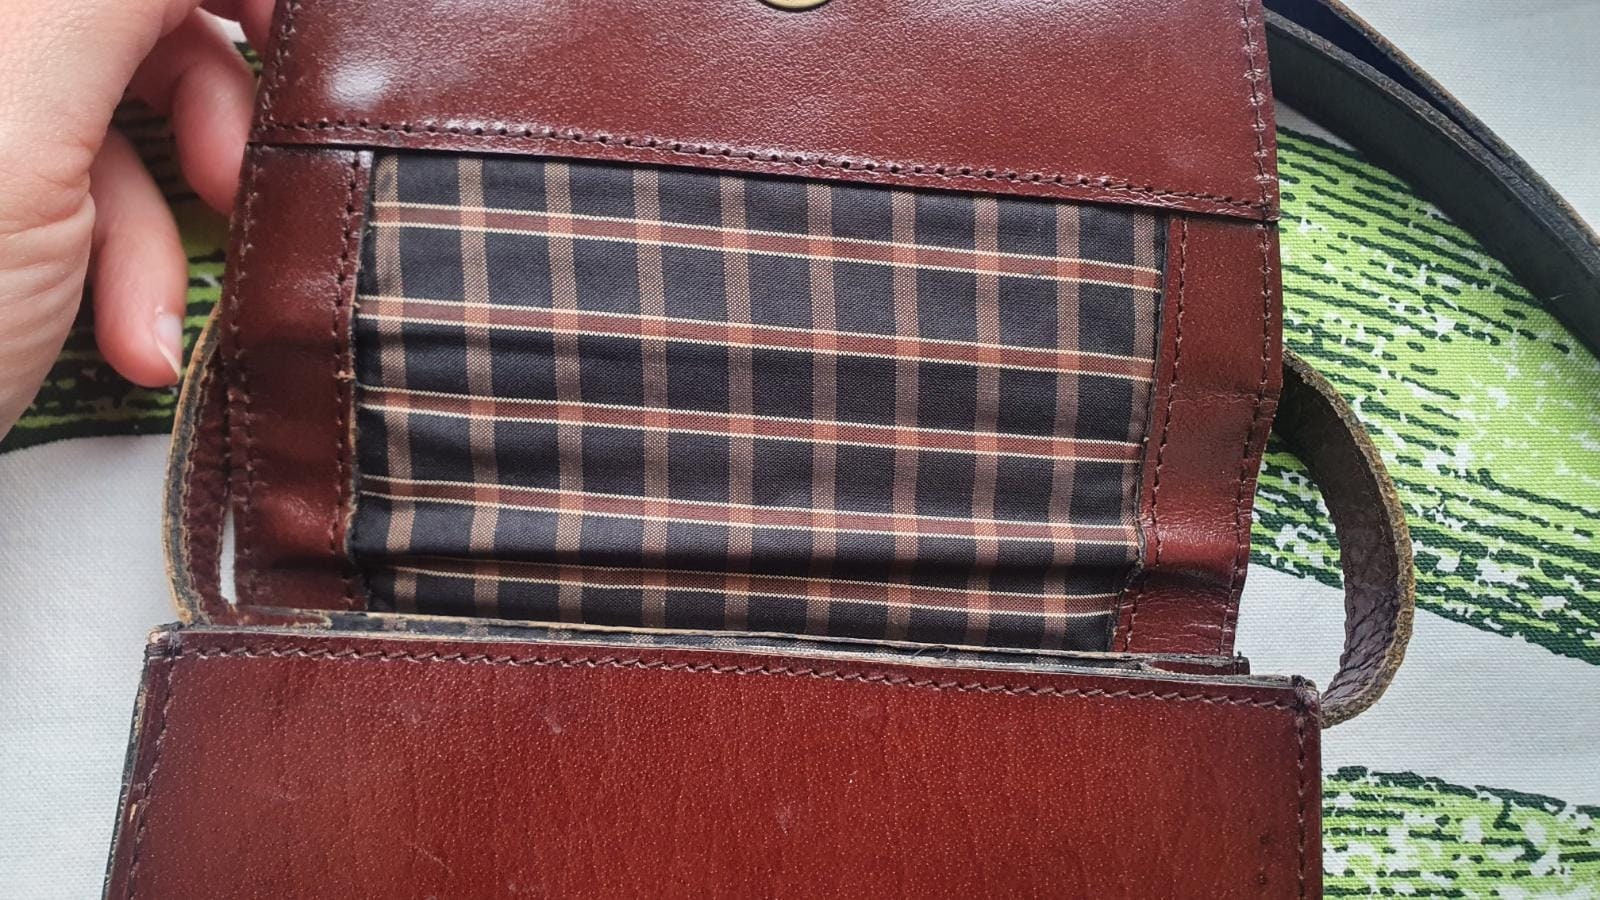 Vintage Leather Crossbody Handbag Purse Bear Design Pure 